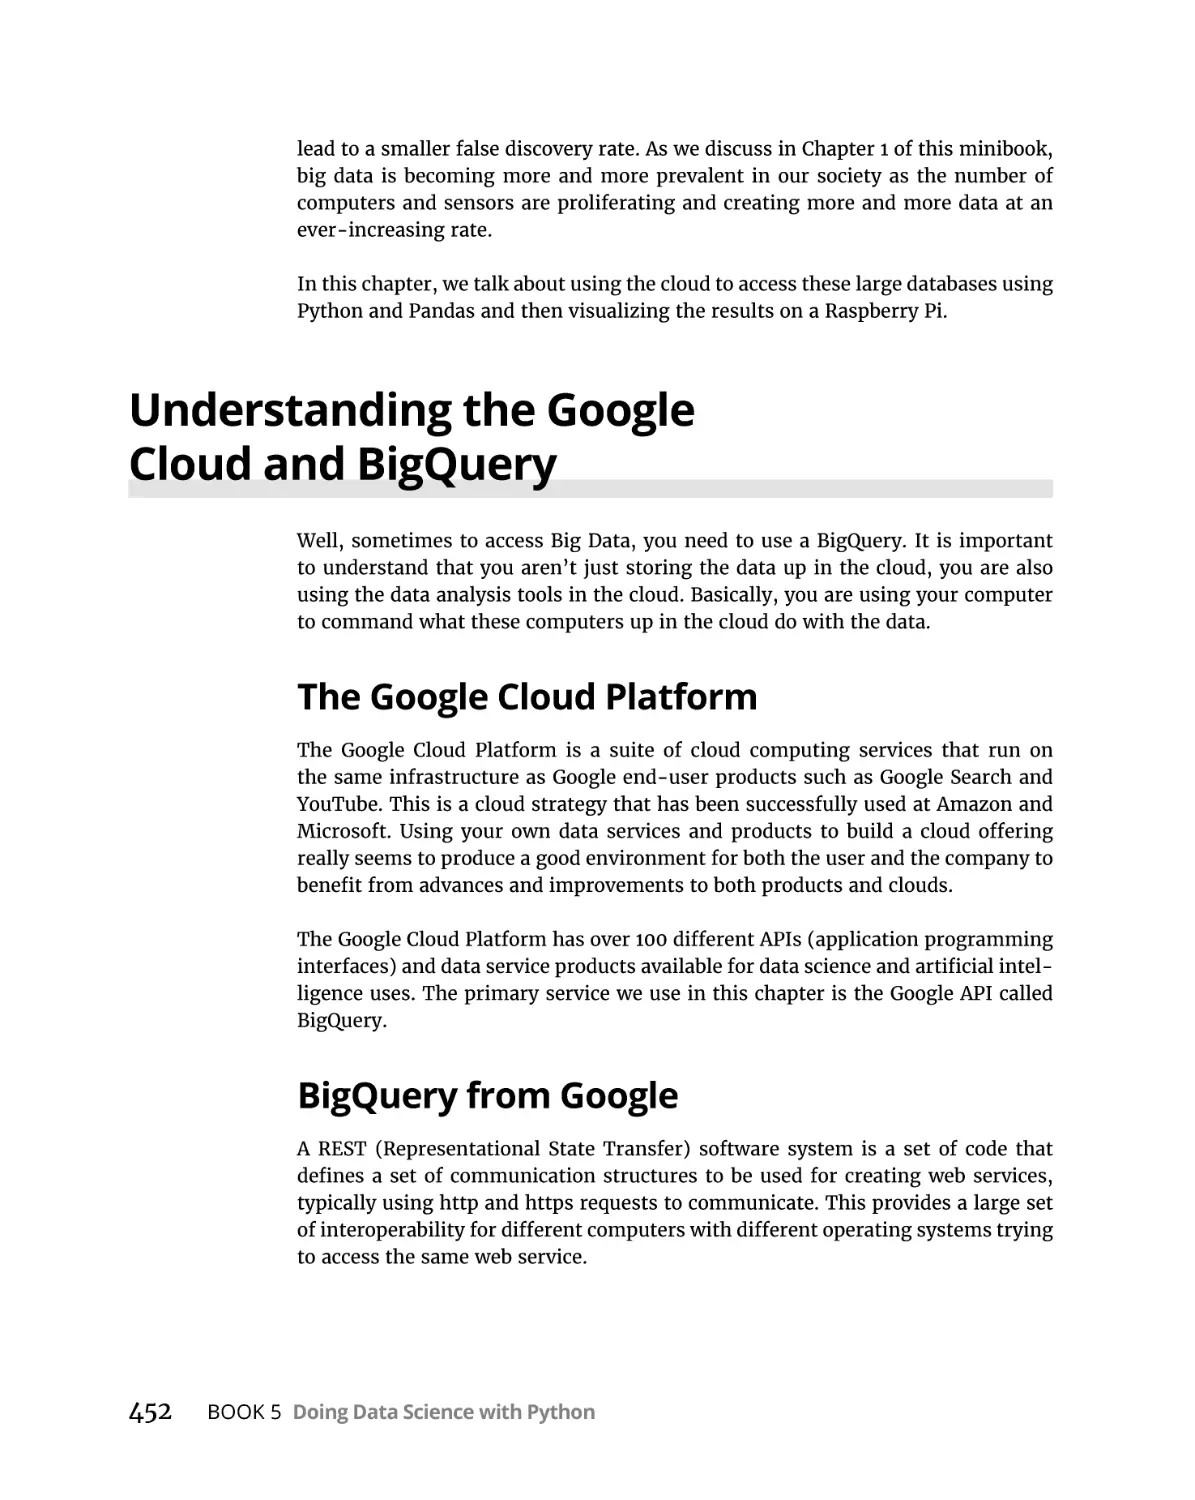 Understanding the Google Cloud and BigQuery
The Google Cloud Platform
BigQuery from Google